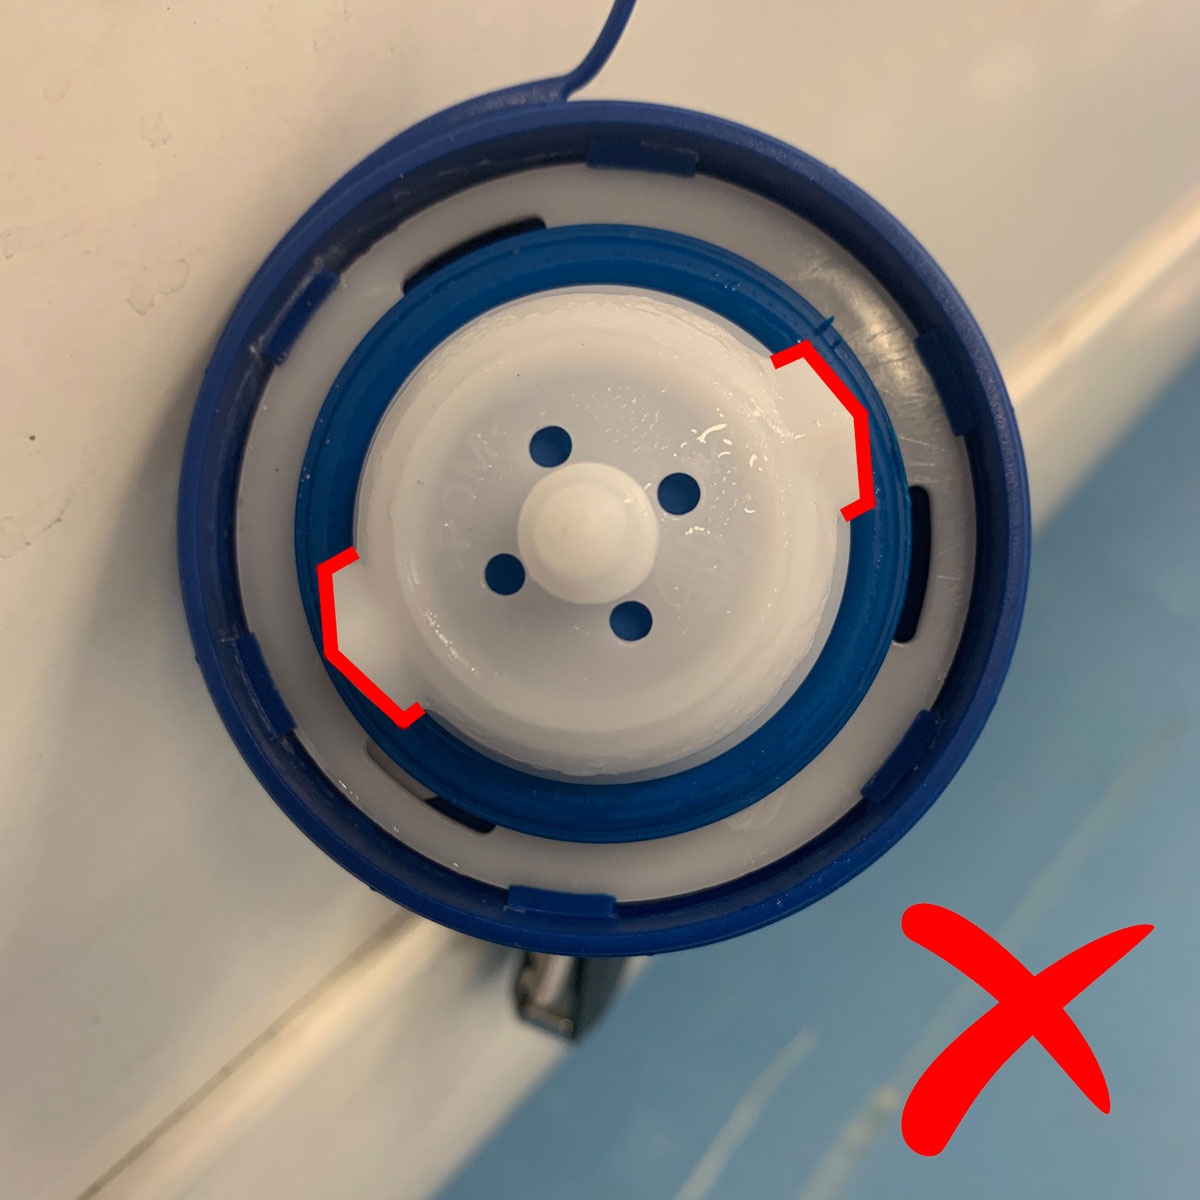 waterconnector, 3-pin